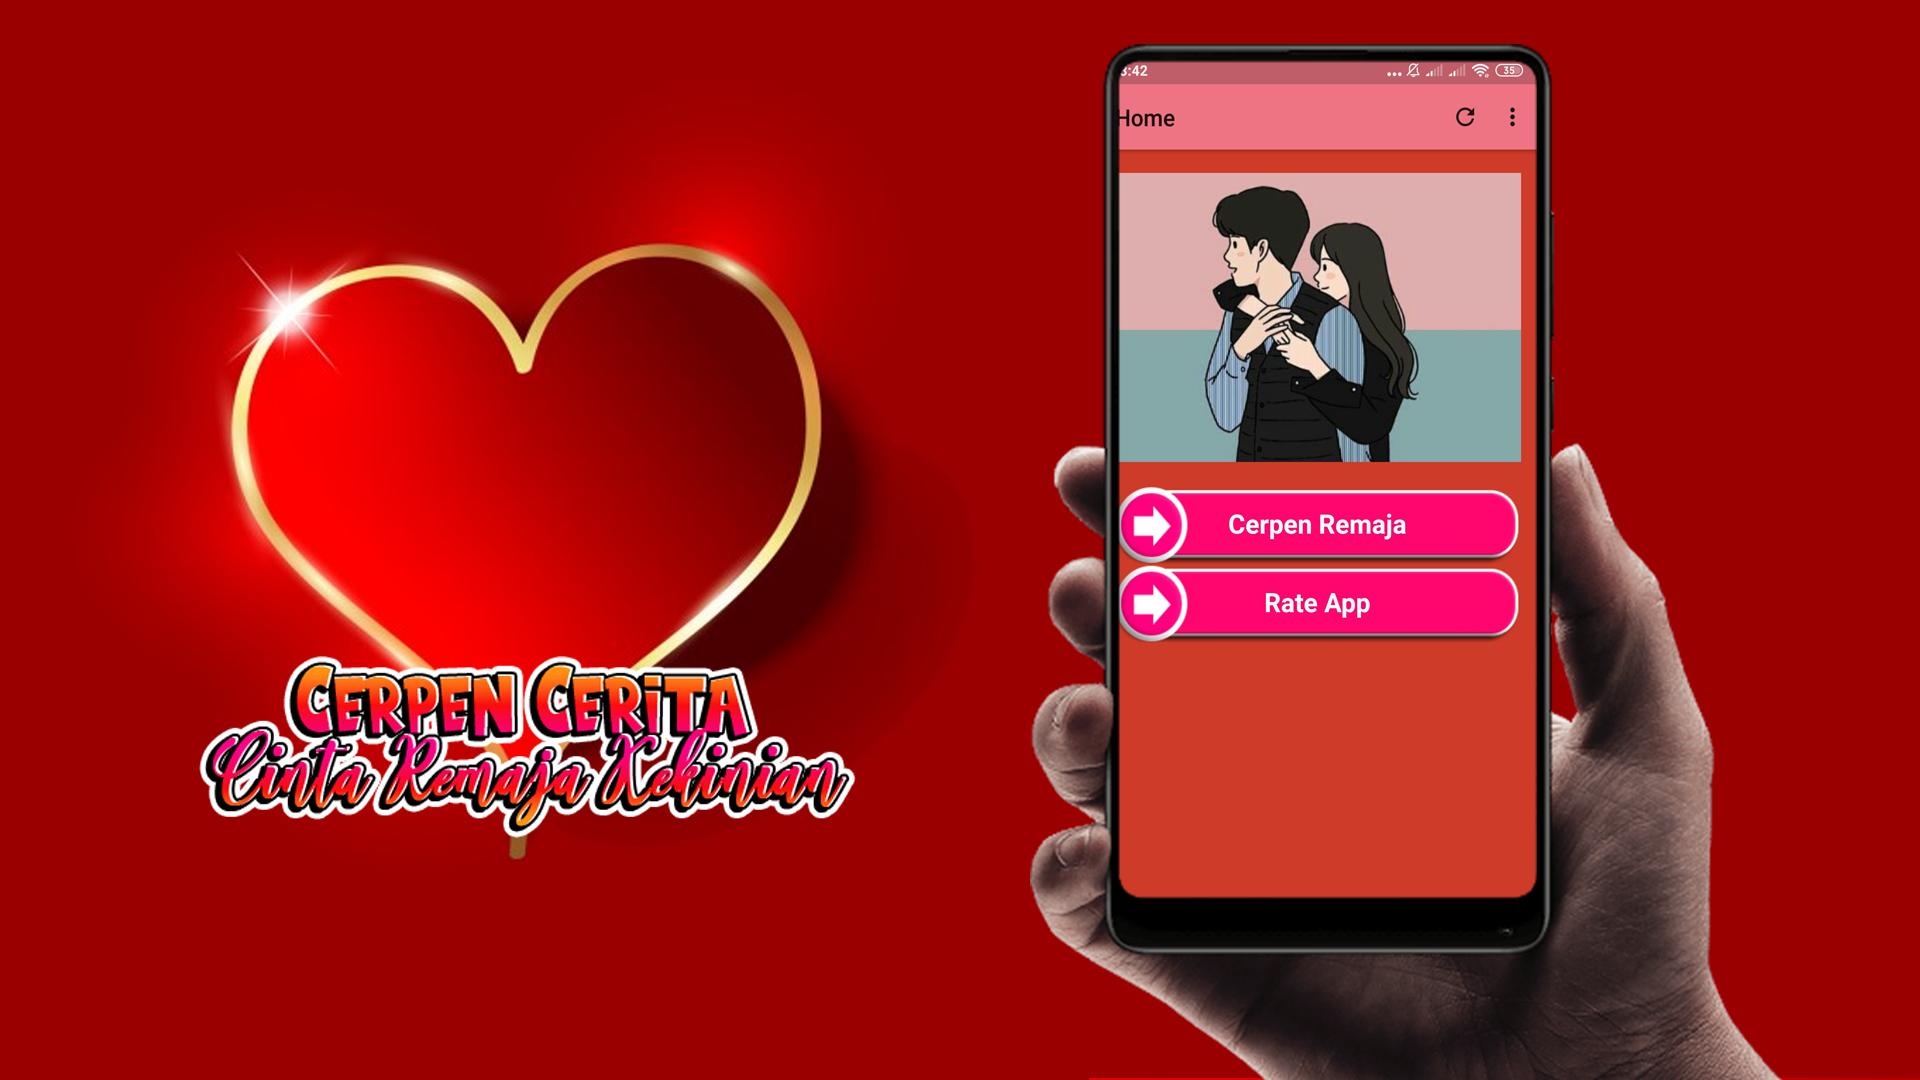 Cerpen Cerita Cinta Remaja Romantis Kekinian For Android Apk Download